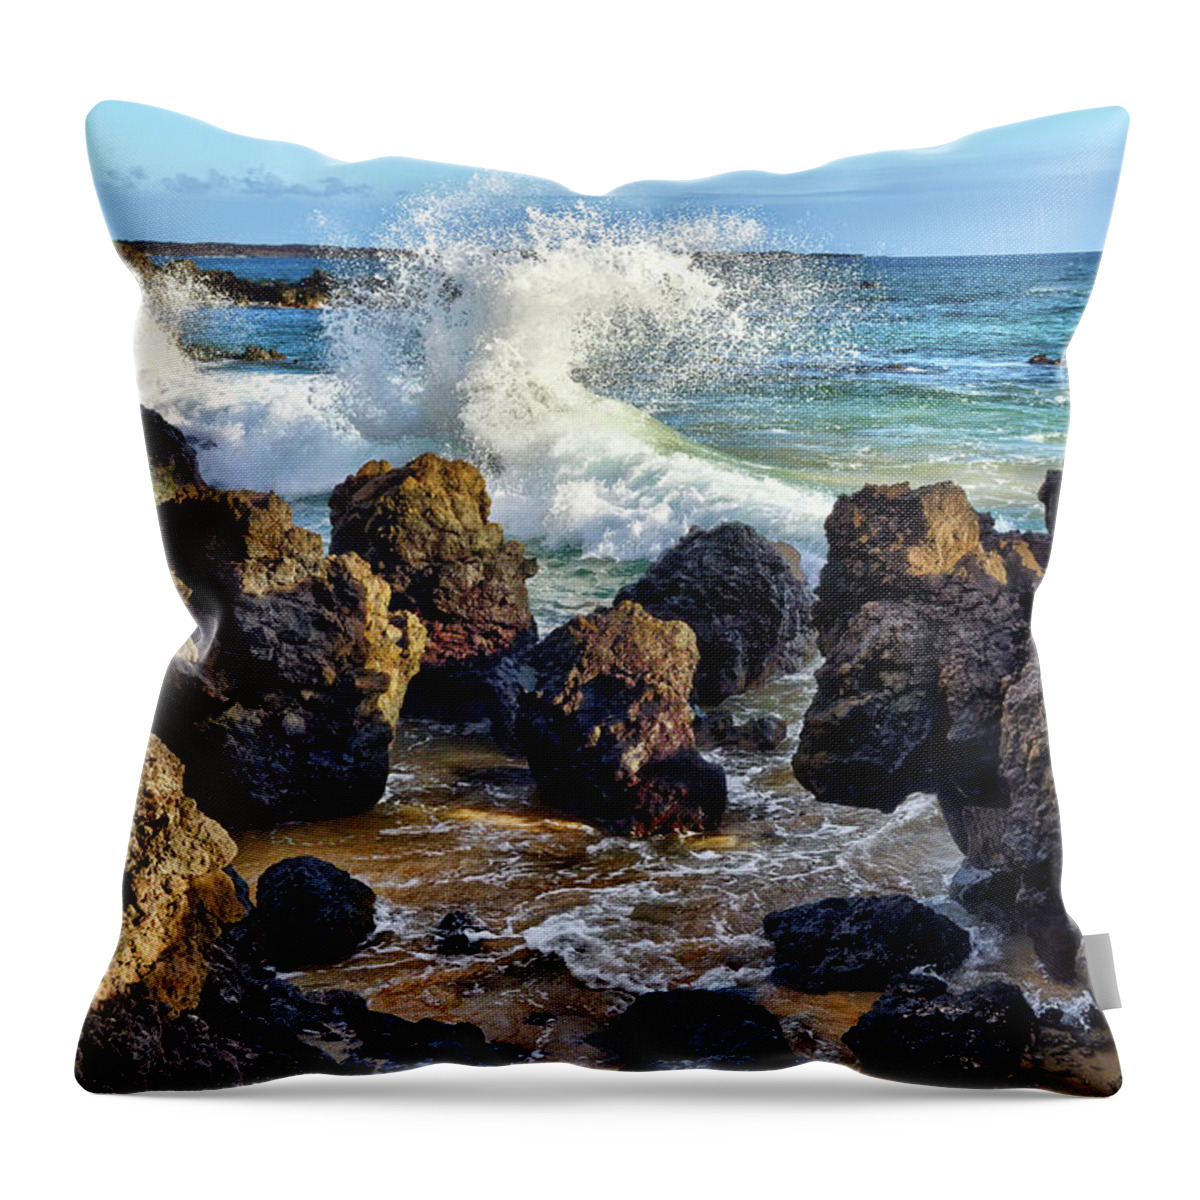 Maui Throw Pillow featuring the photograph Maui Wave Crash by Eddie Yerkish